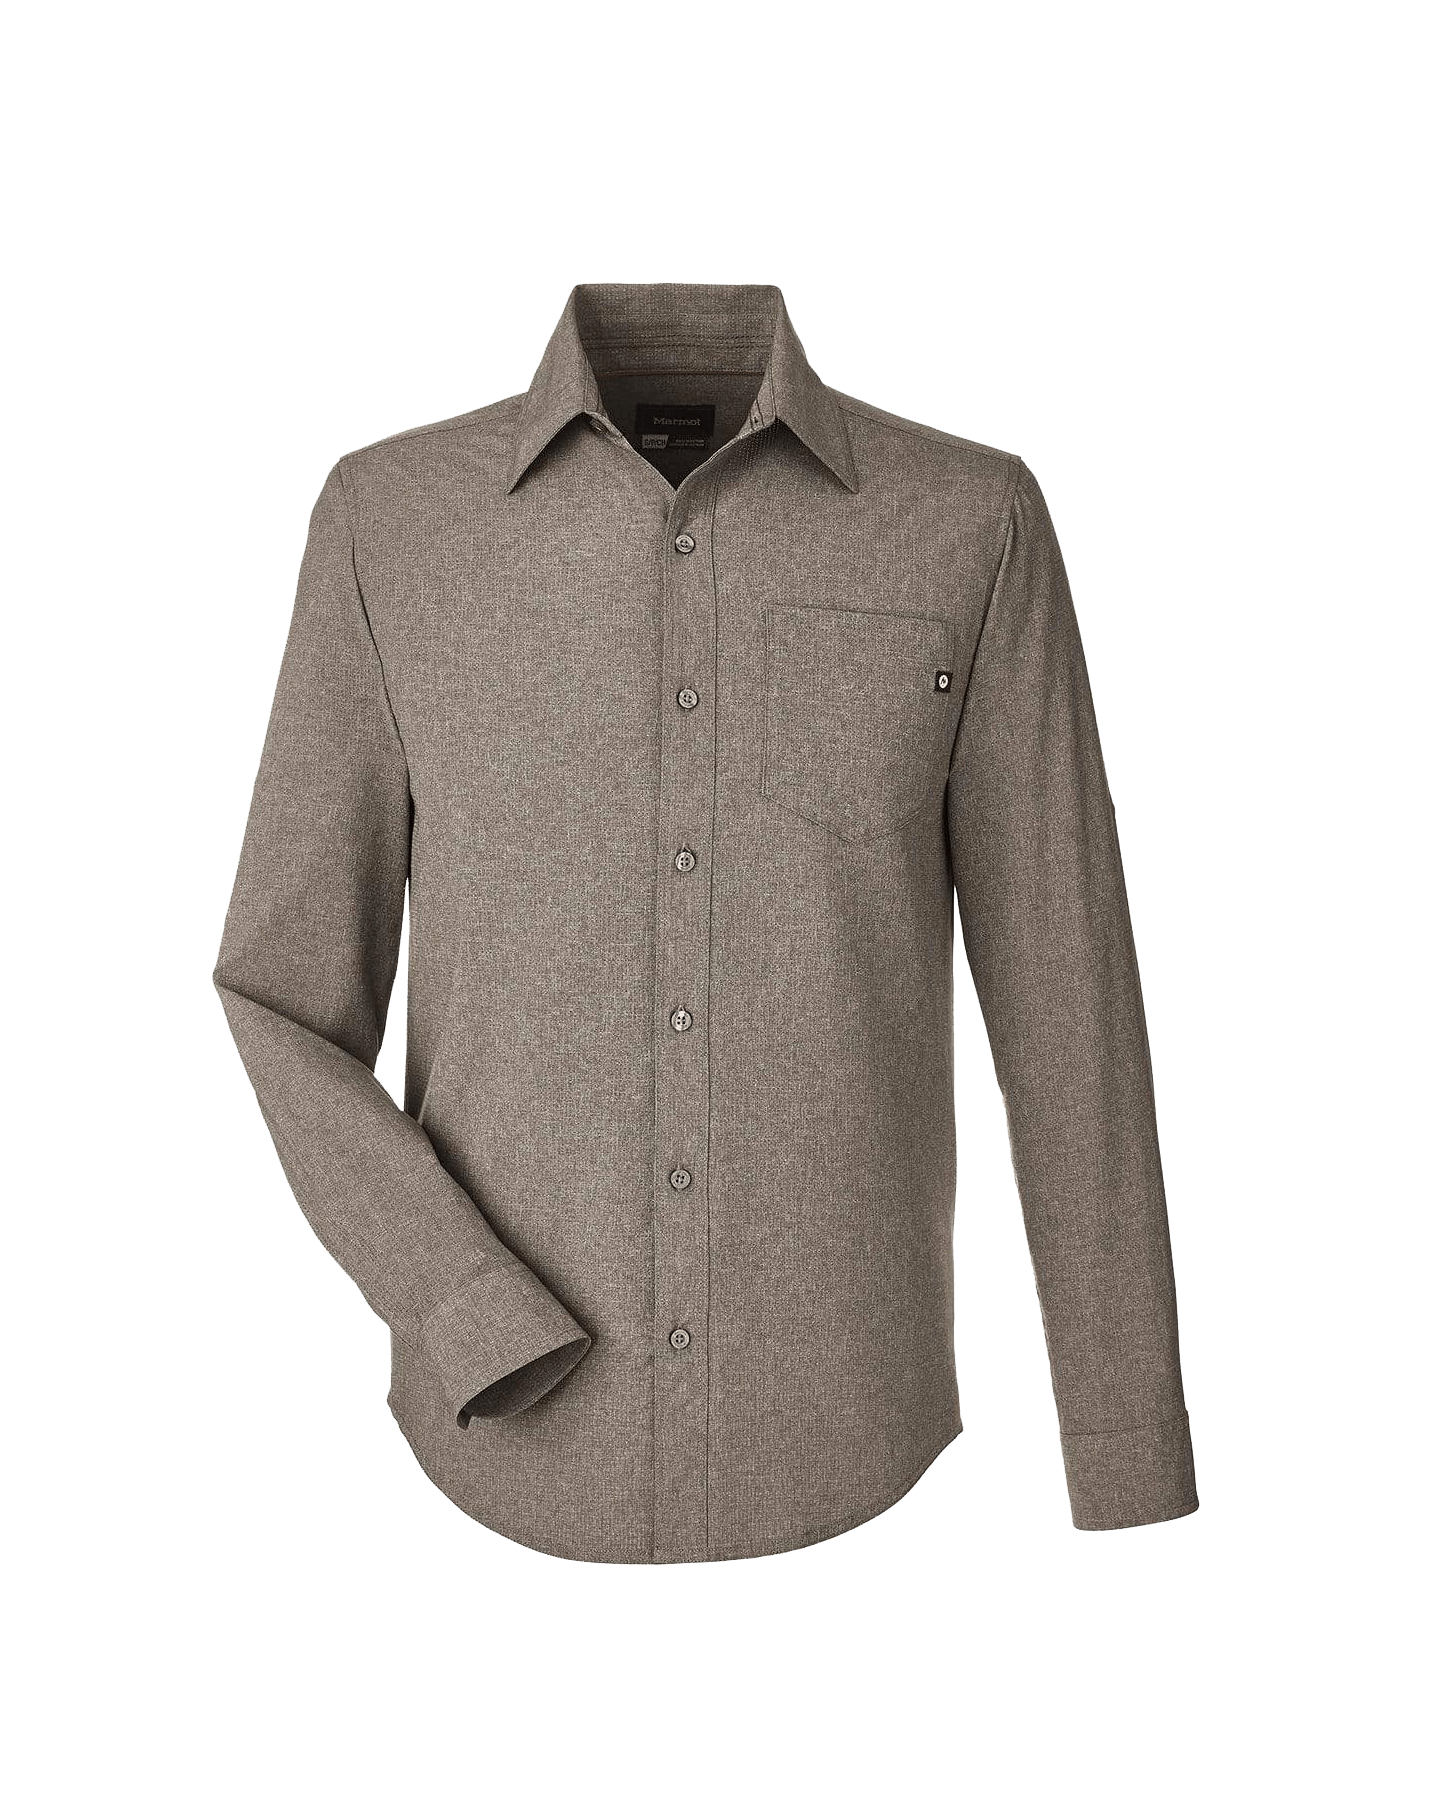 SM / Desert Khaki Custom Marmot Men's Aerobora Woven Shirt